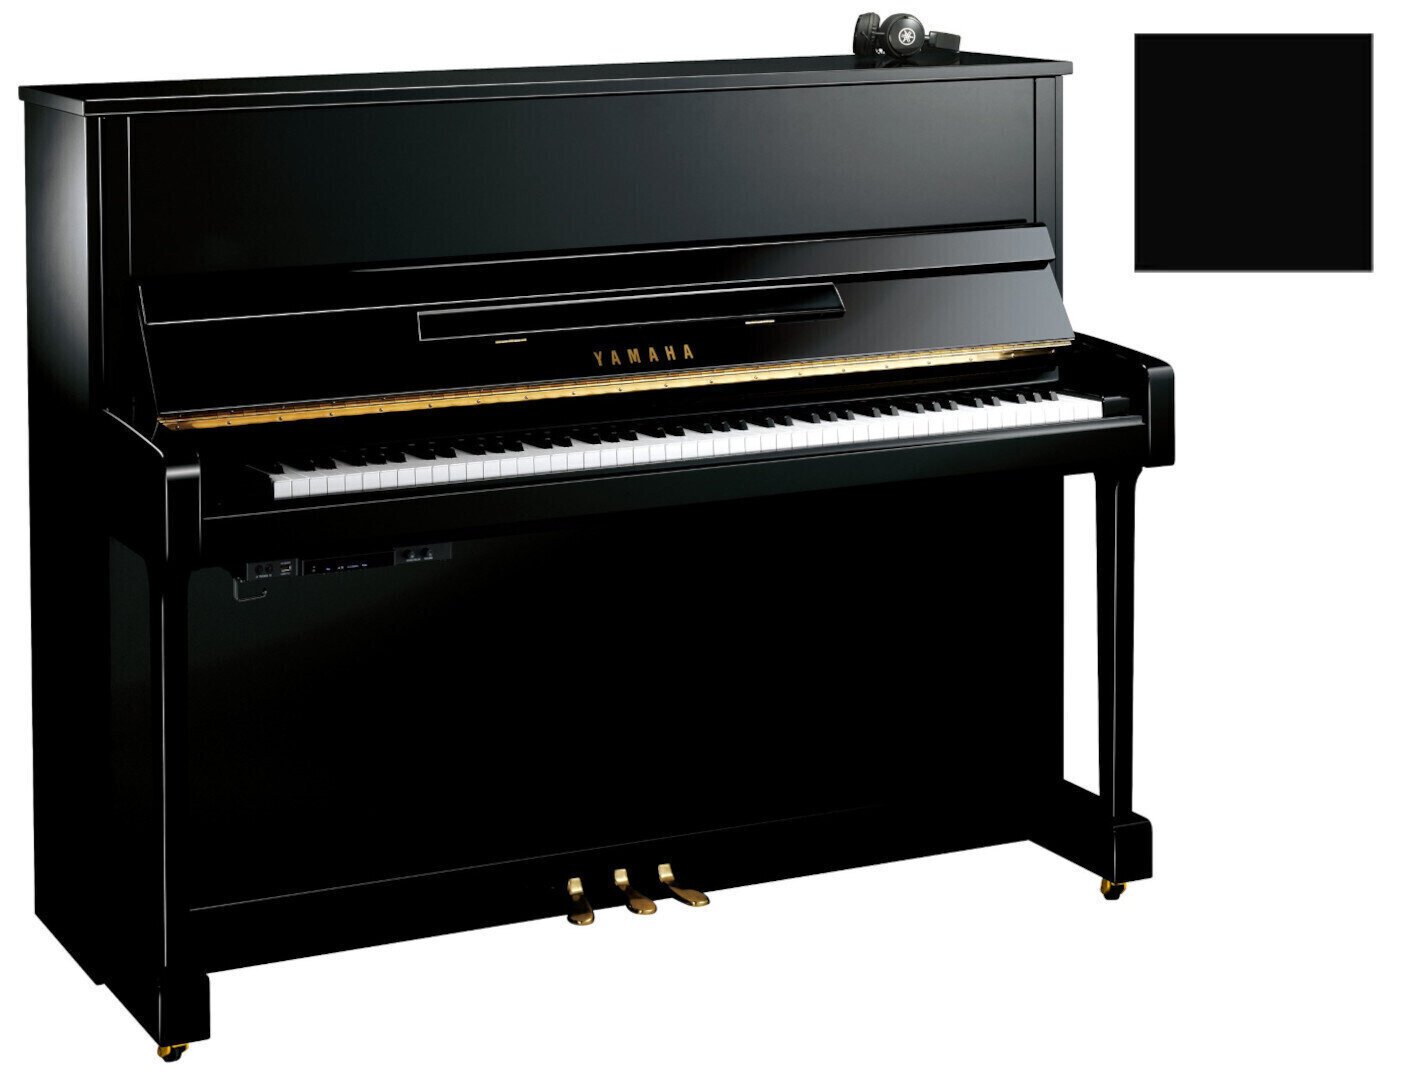 Piano Yamaha B3 SC2 Silent Piano Polished Ebony with Chrome